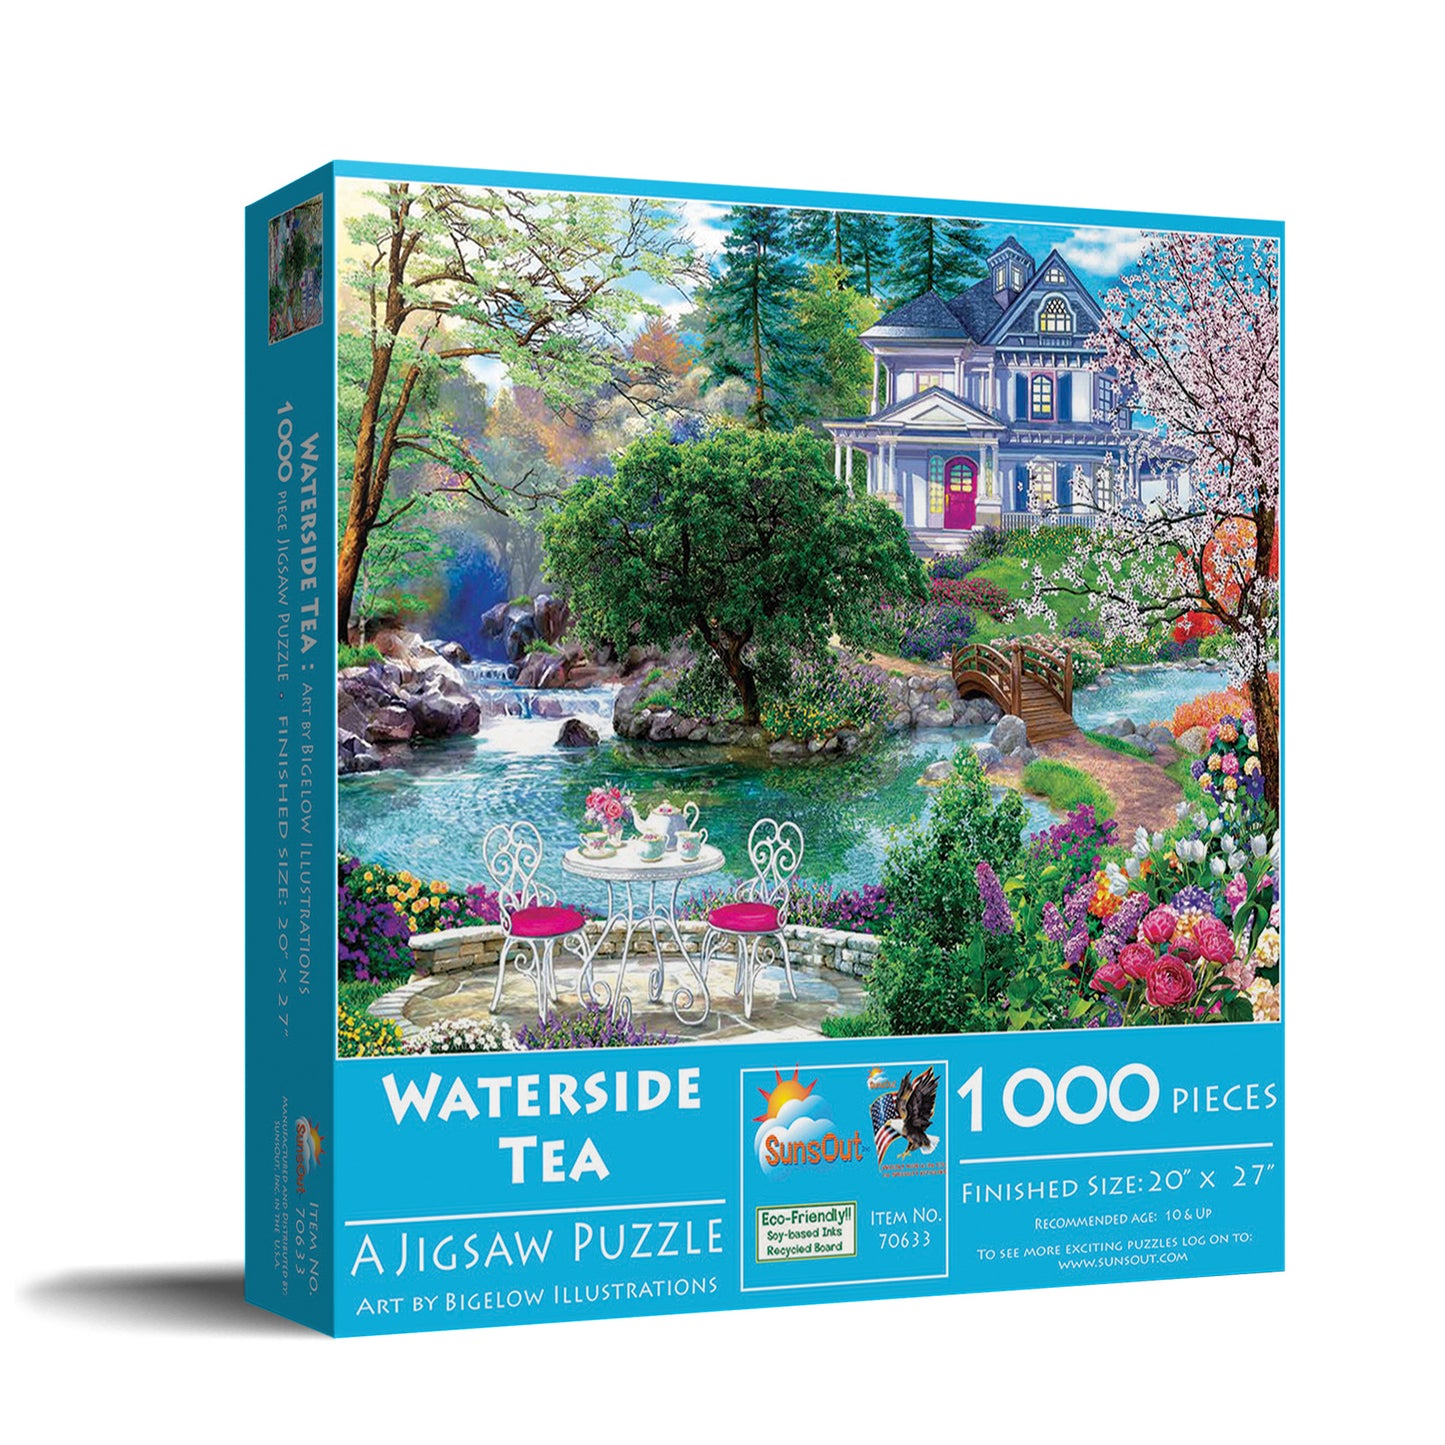 Waterside Tea 1000 Piece Jigsaw Puzzle by SunsOut